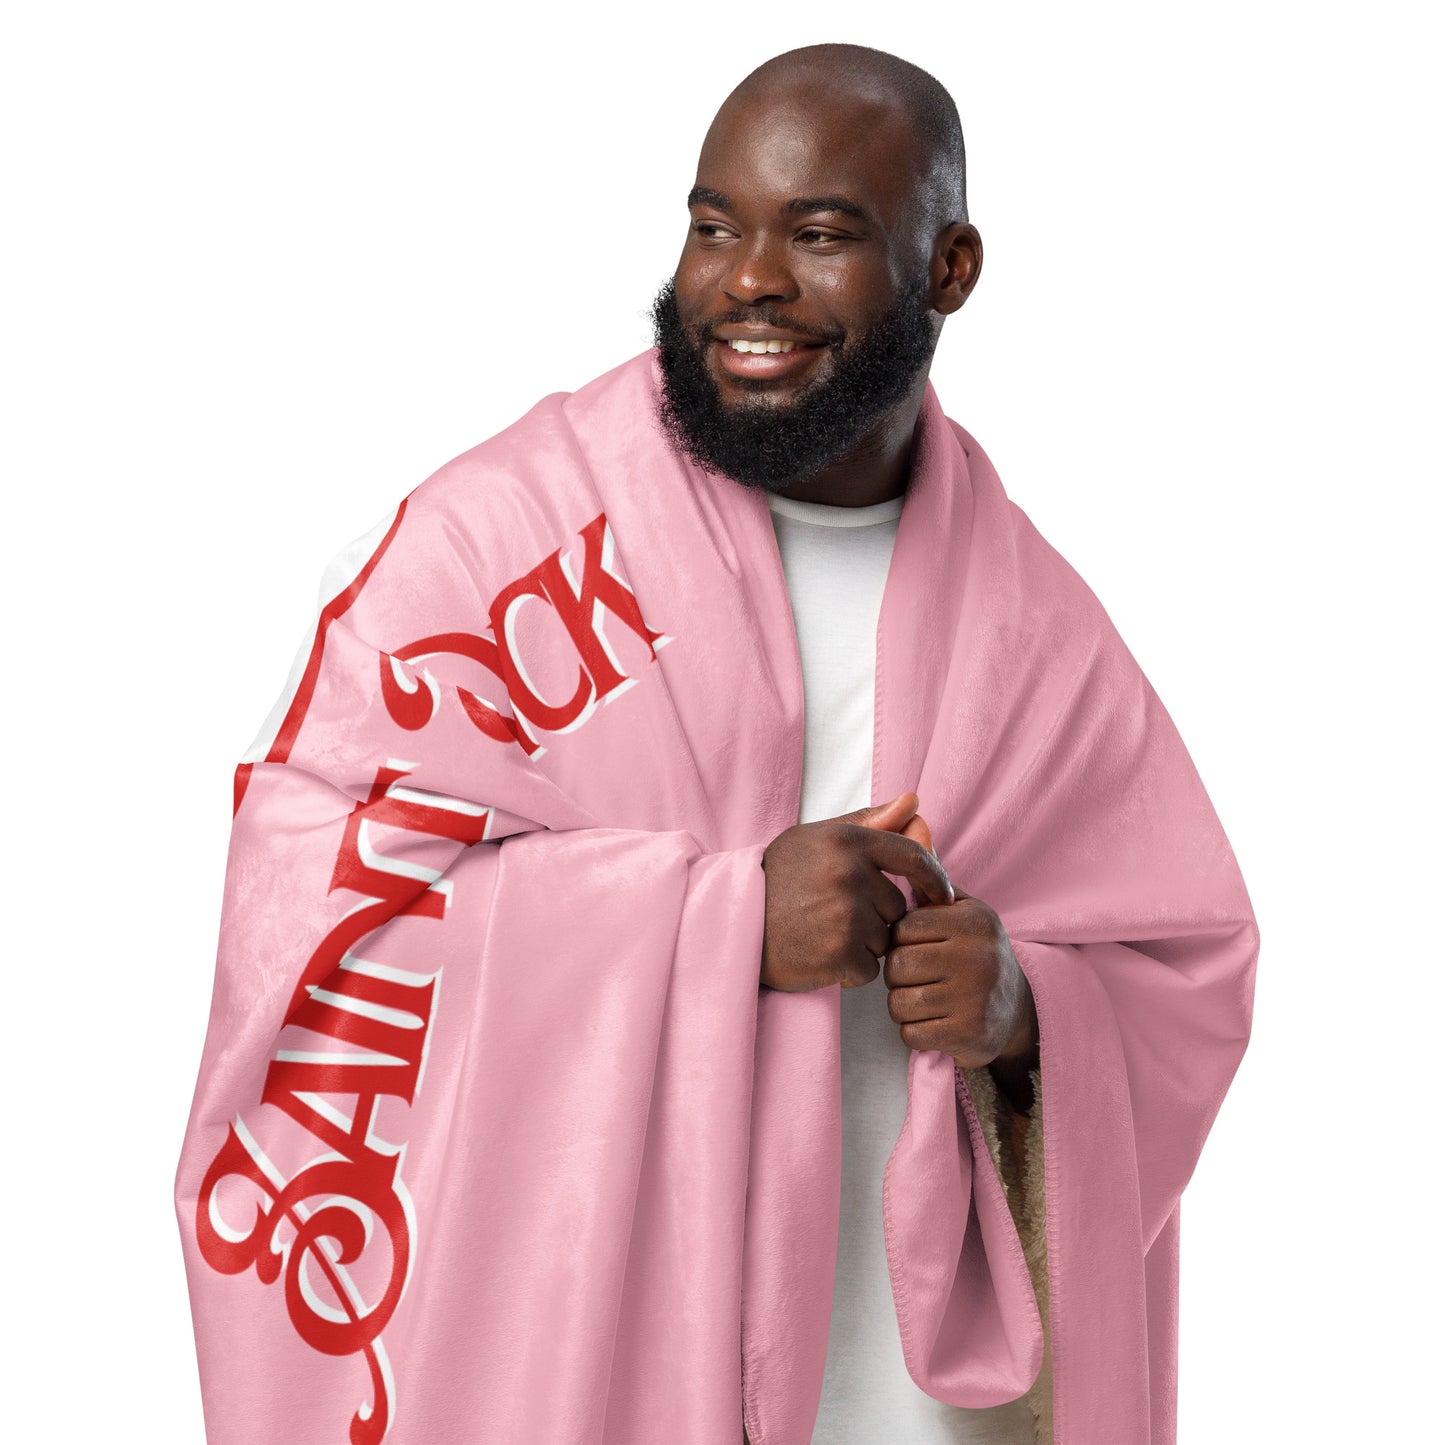 Jolly Old Saint Dick in Pink Sherpa Blanket